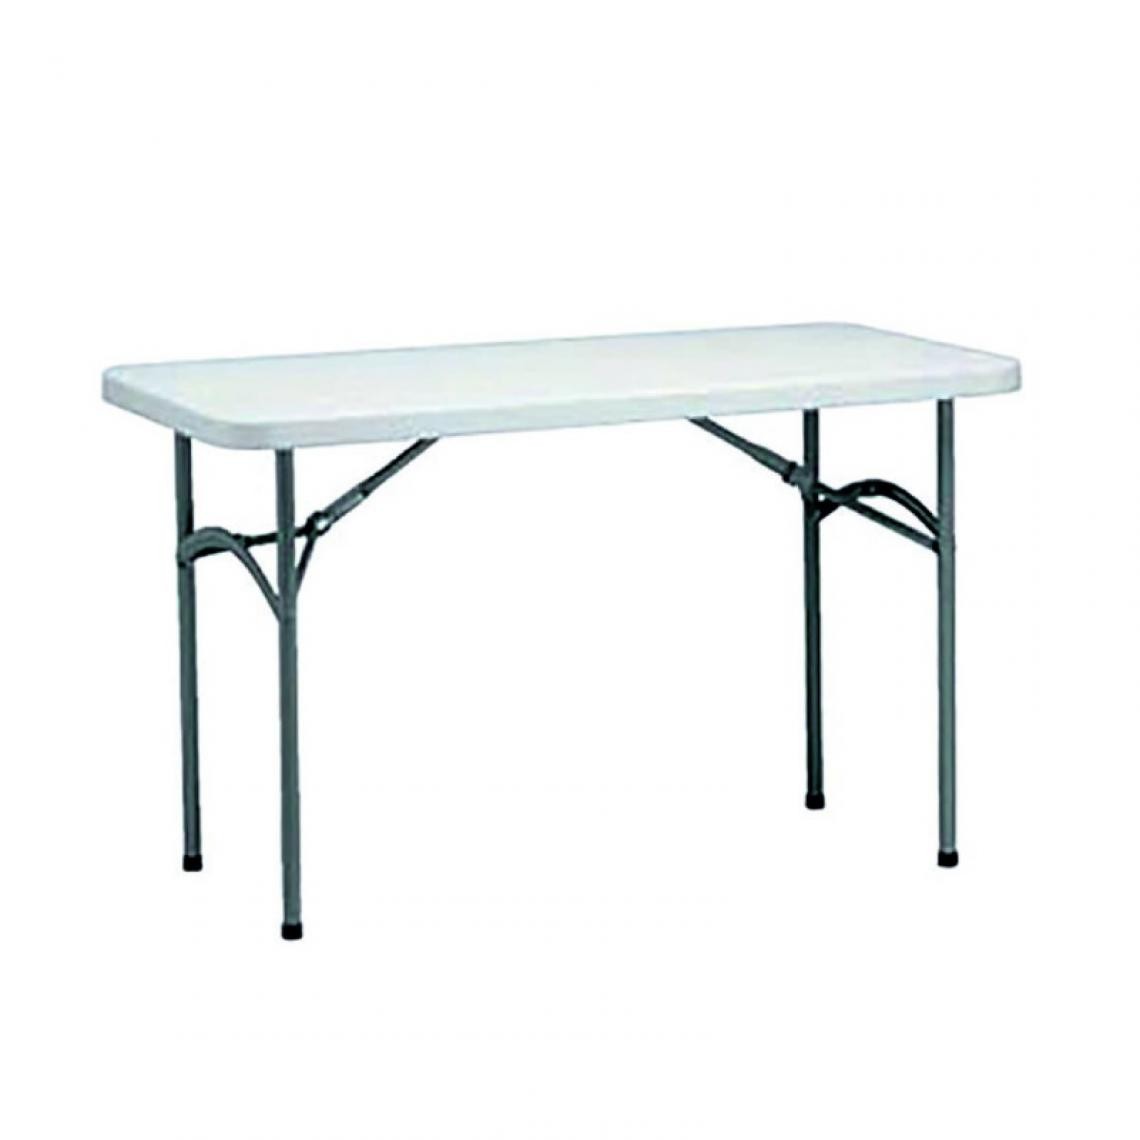 Resol - Table Strauss 122x60 - RESOL - polyéthylène, acier peint - Tables à manger